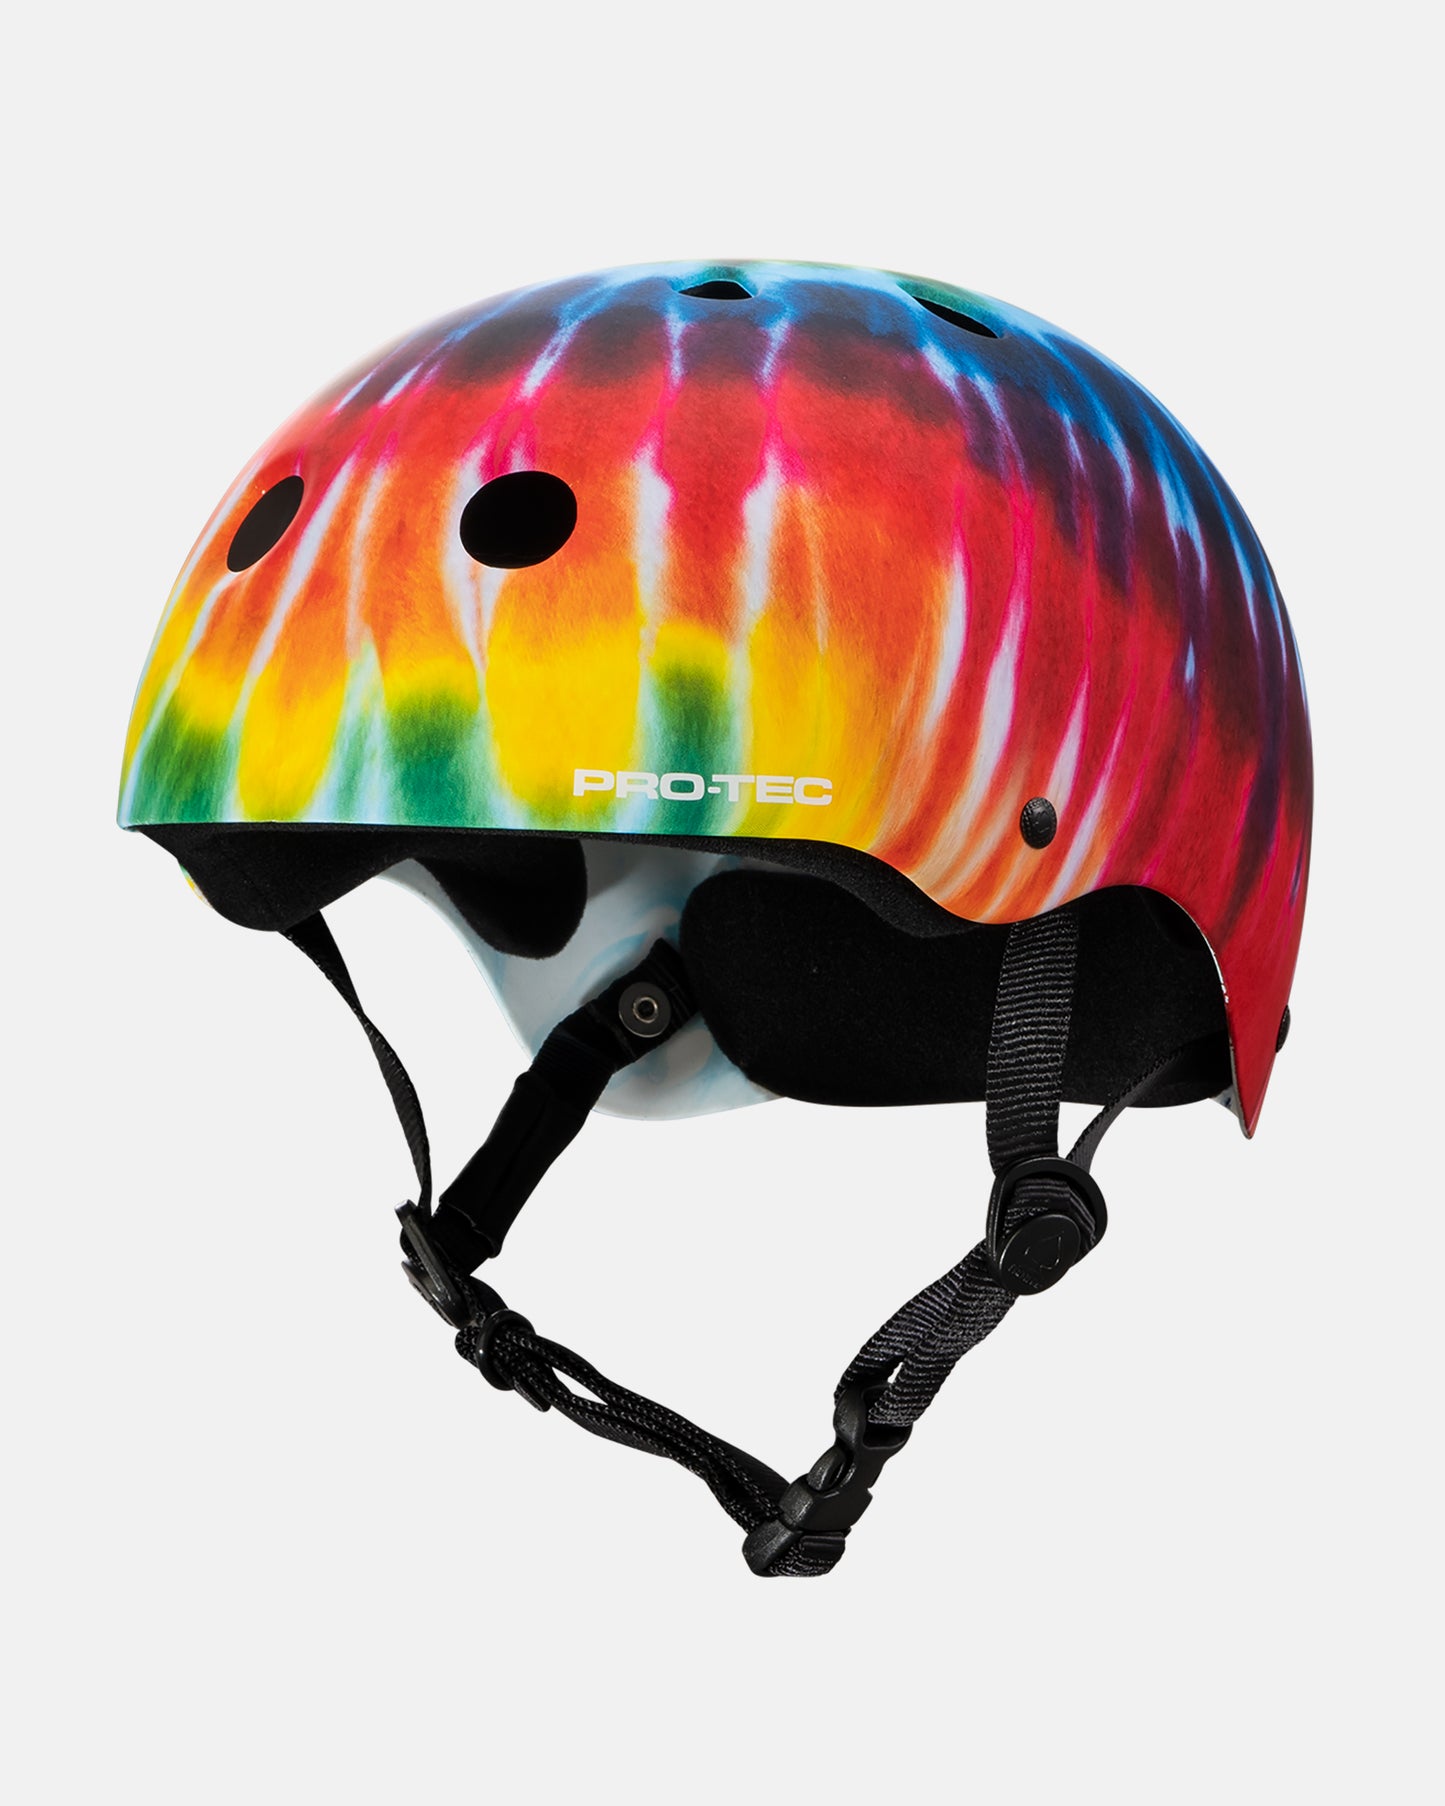 Protec Classic Skate Helmet - Tie Dye - Impala Rollerskates